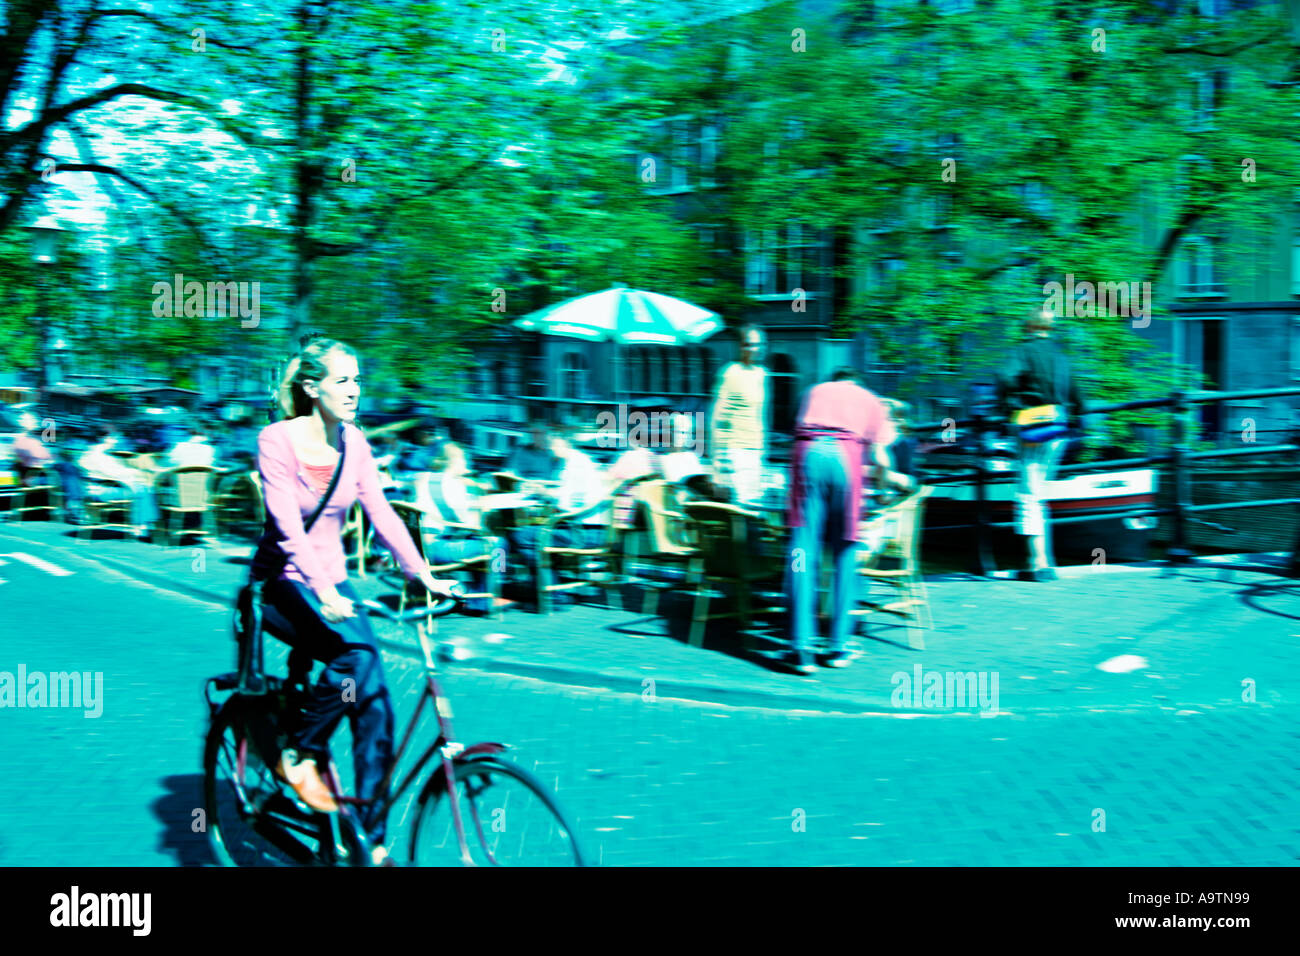 Amsterdam Jourdan woman on bicycle cross style Stock Photo